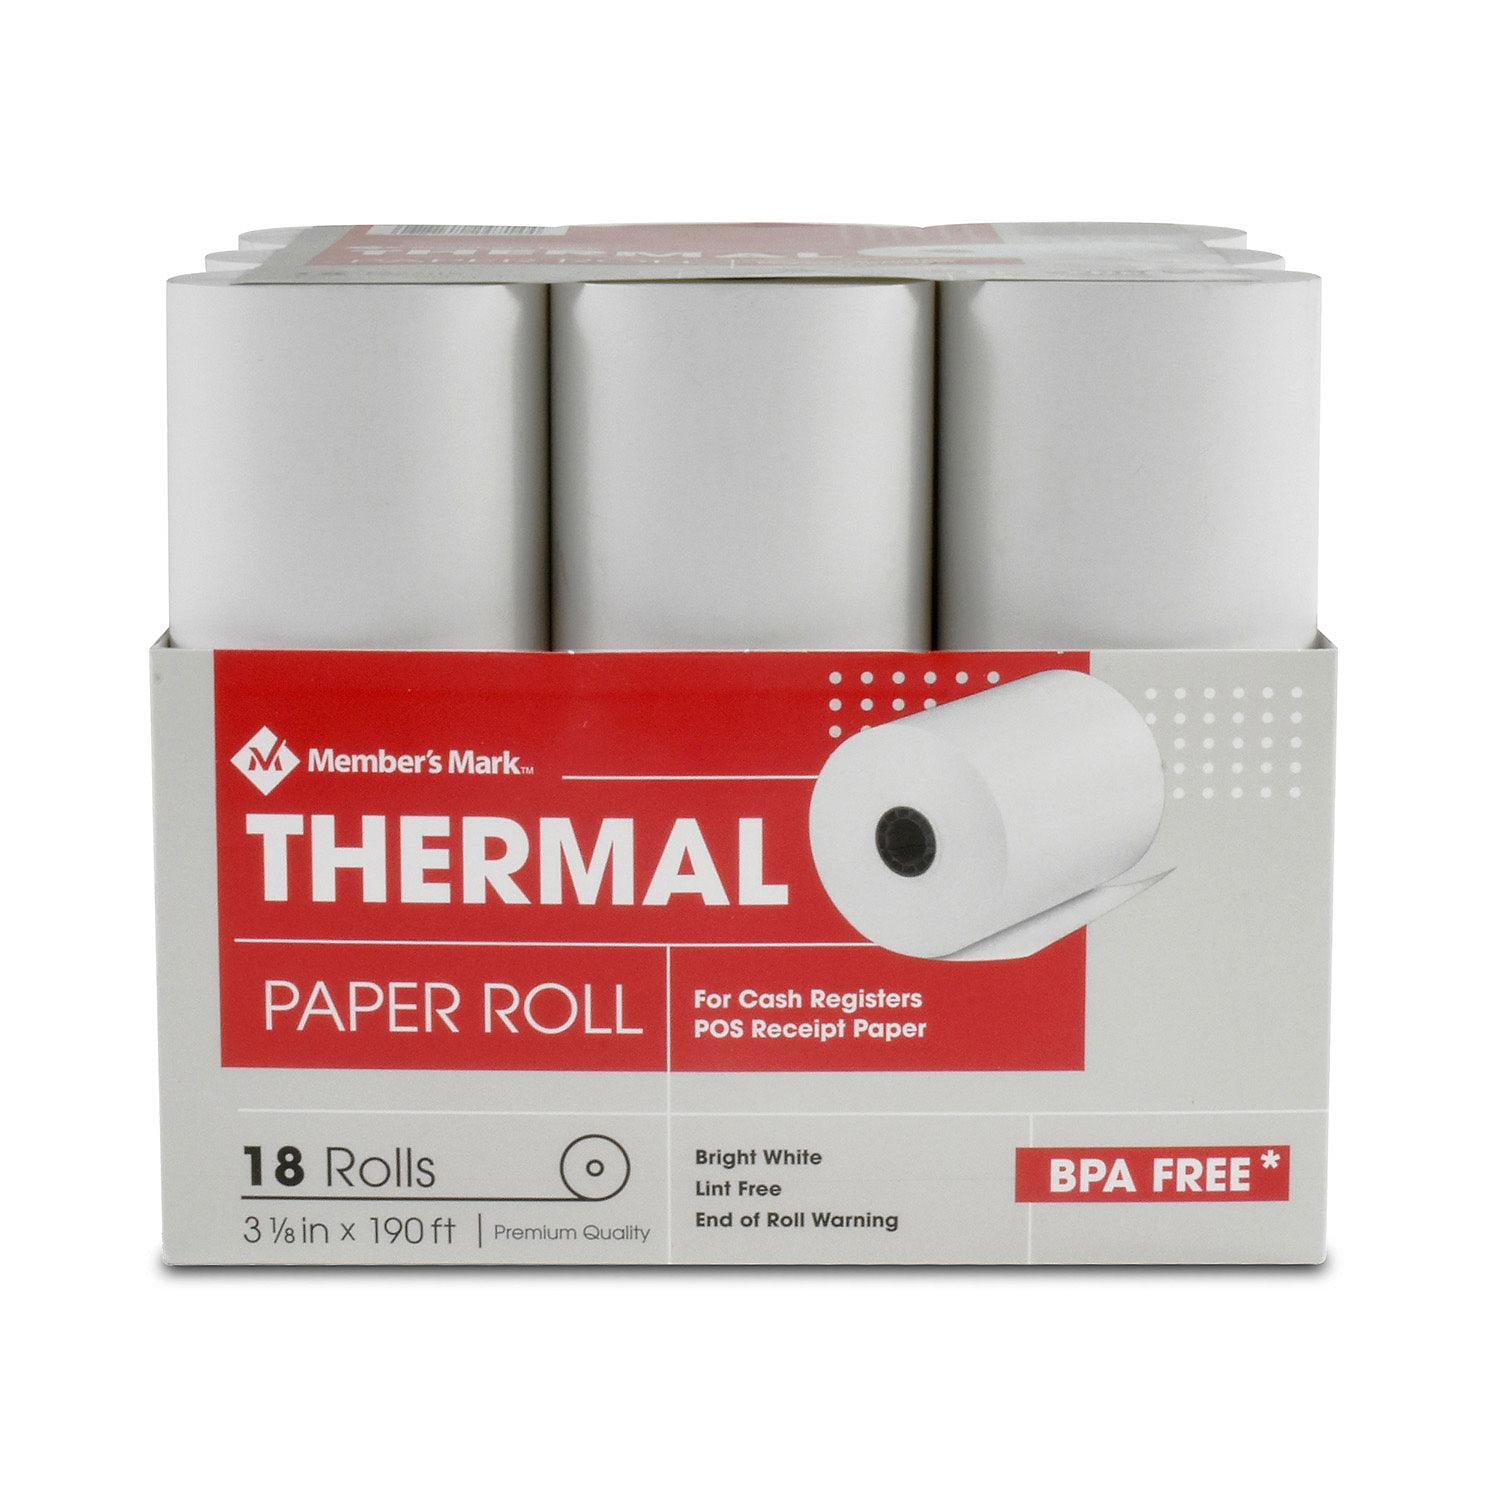 Paper Rolls Thermal Receipt by MM 3 1/8" X 190', 18 Rolls